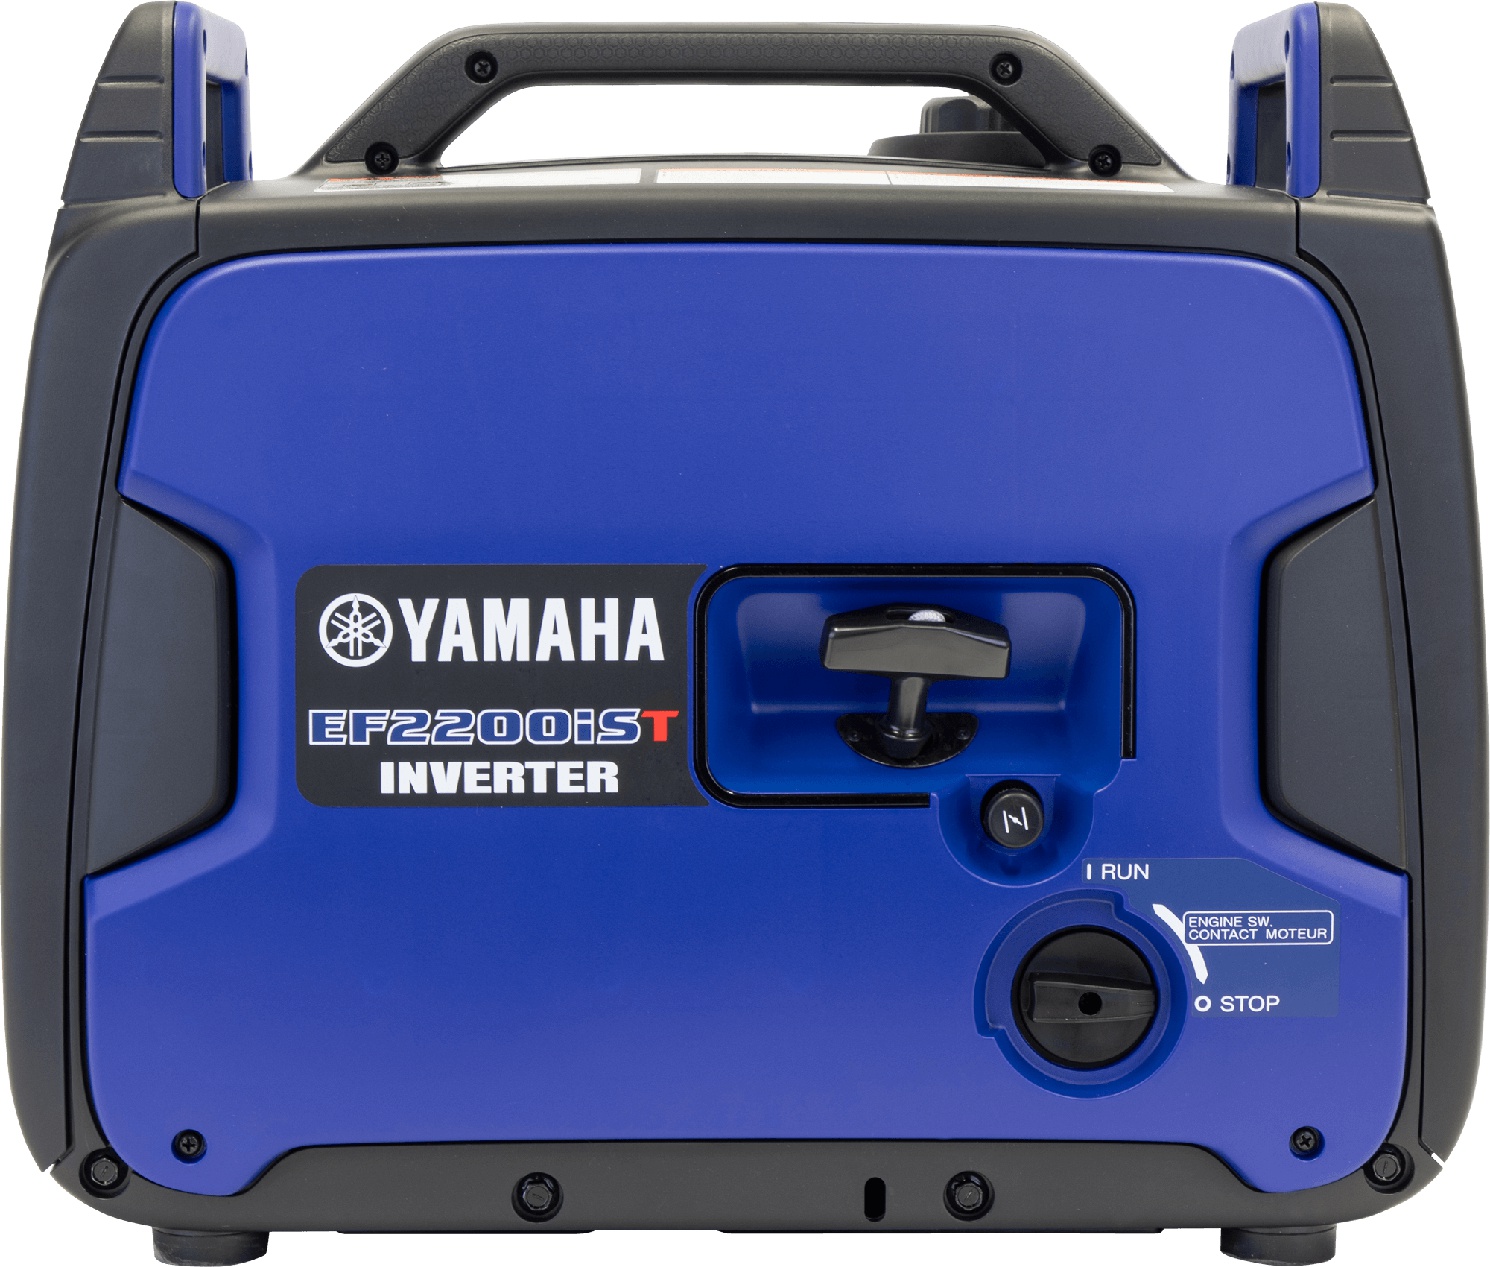 2021 Yamaha Inverter Series EF2200IST